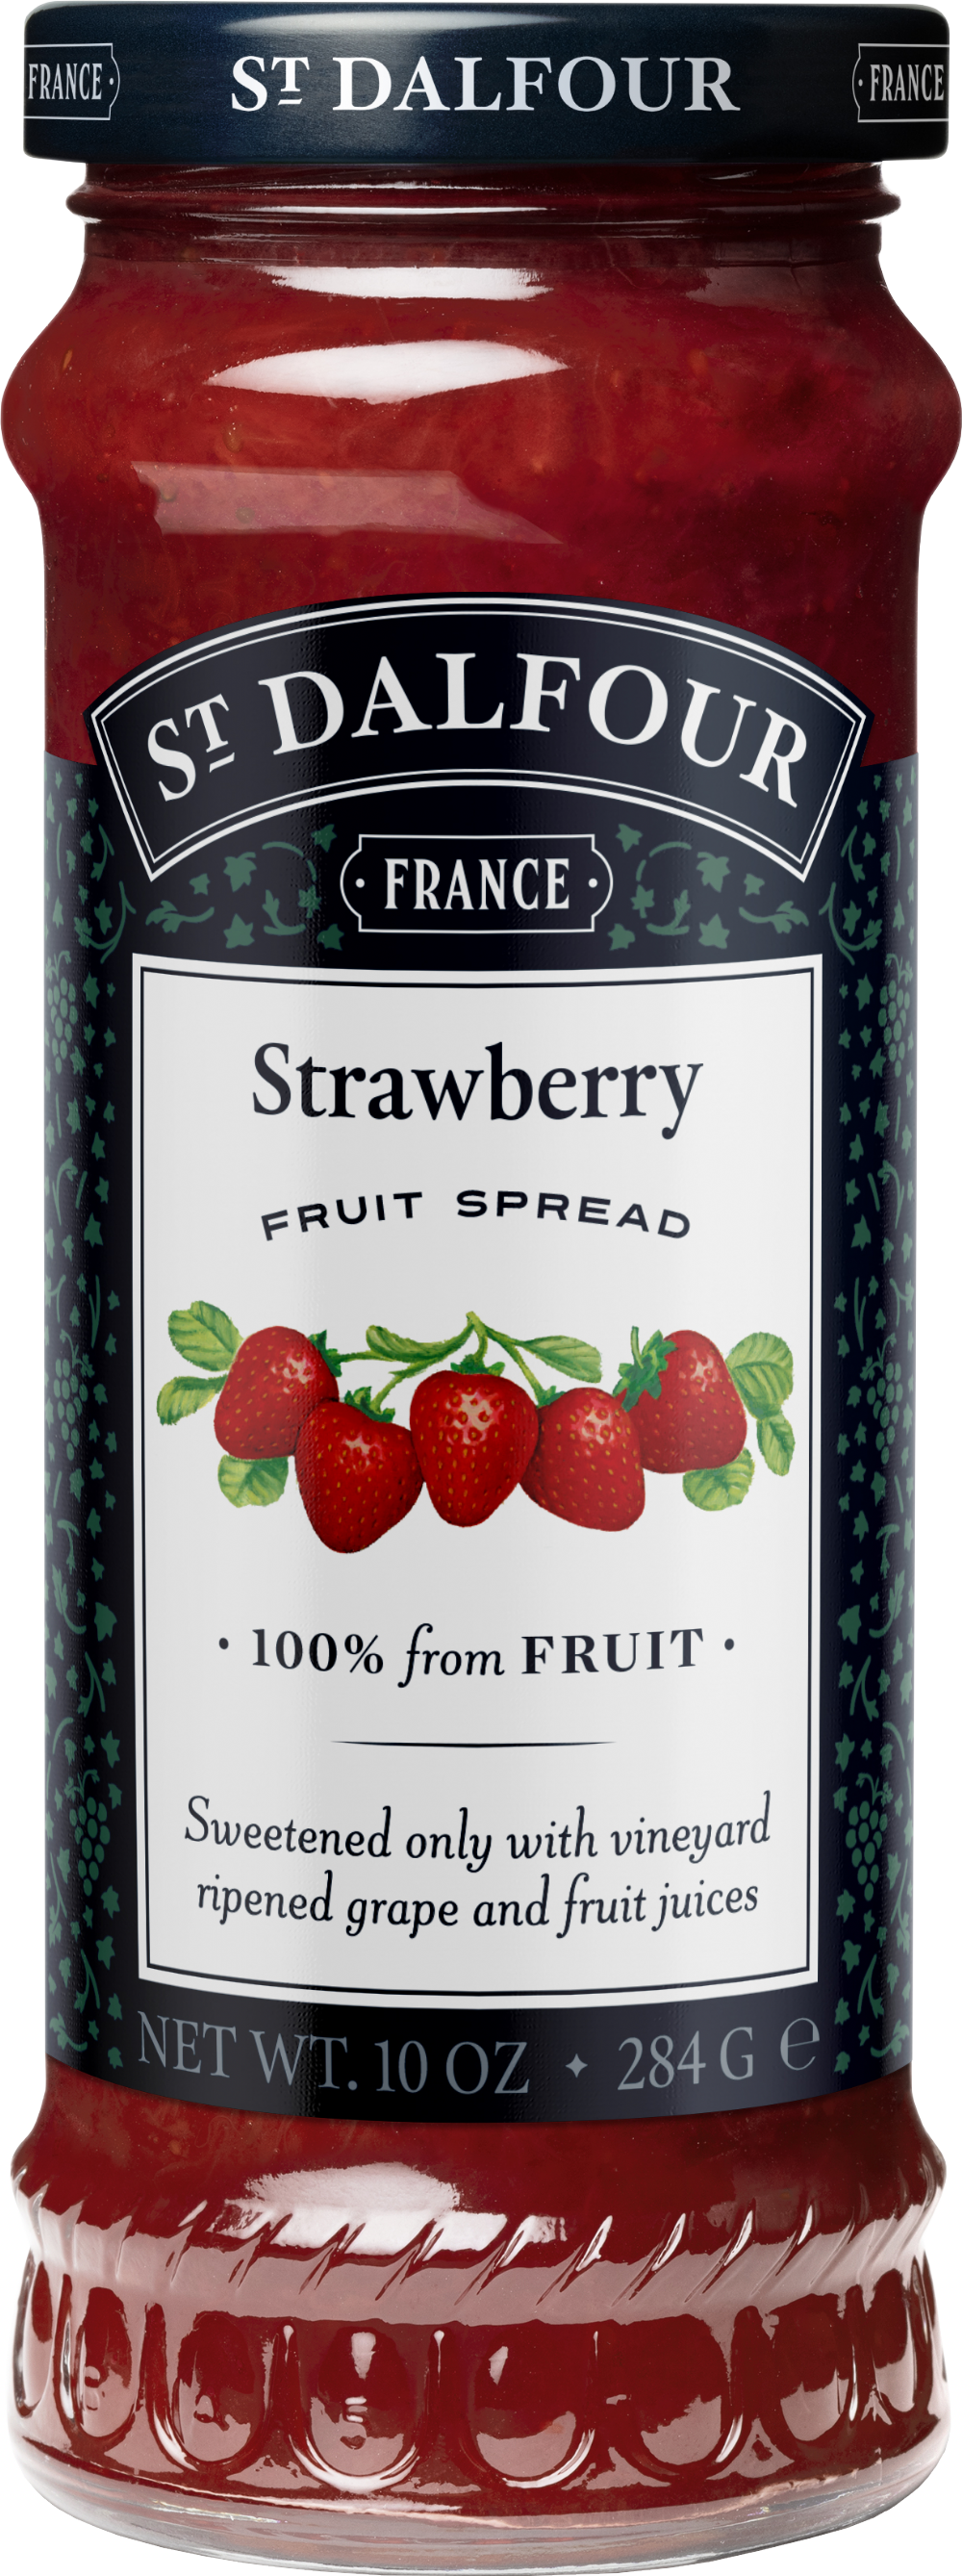 ST DALFOUR Strawberry Fruit Spread 284g